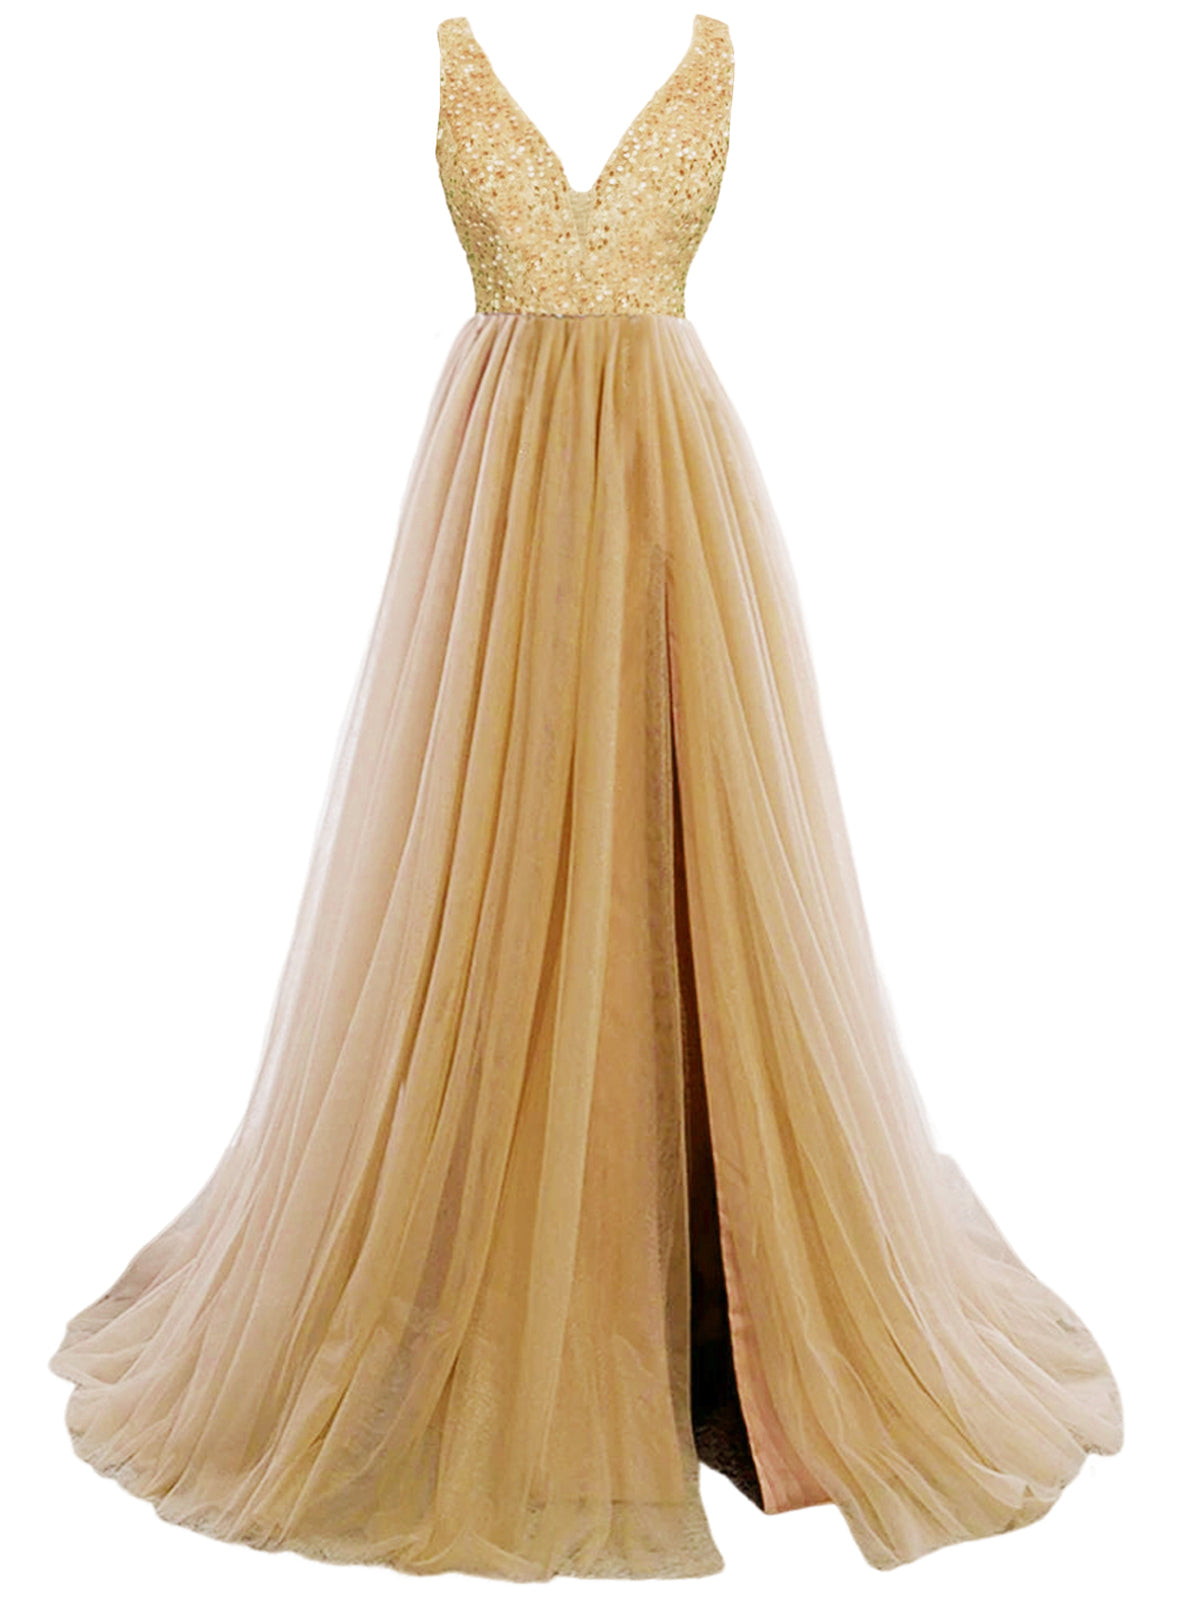 Lace A-Line Spaghetti Straps Sleeveless Prom Dress-GD102174